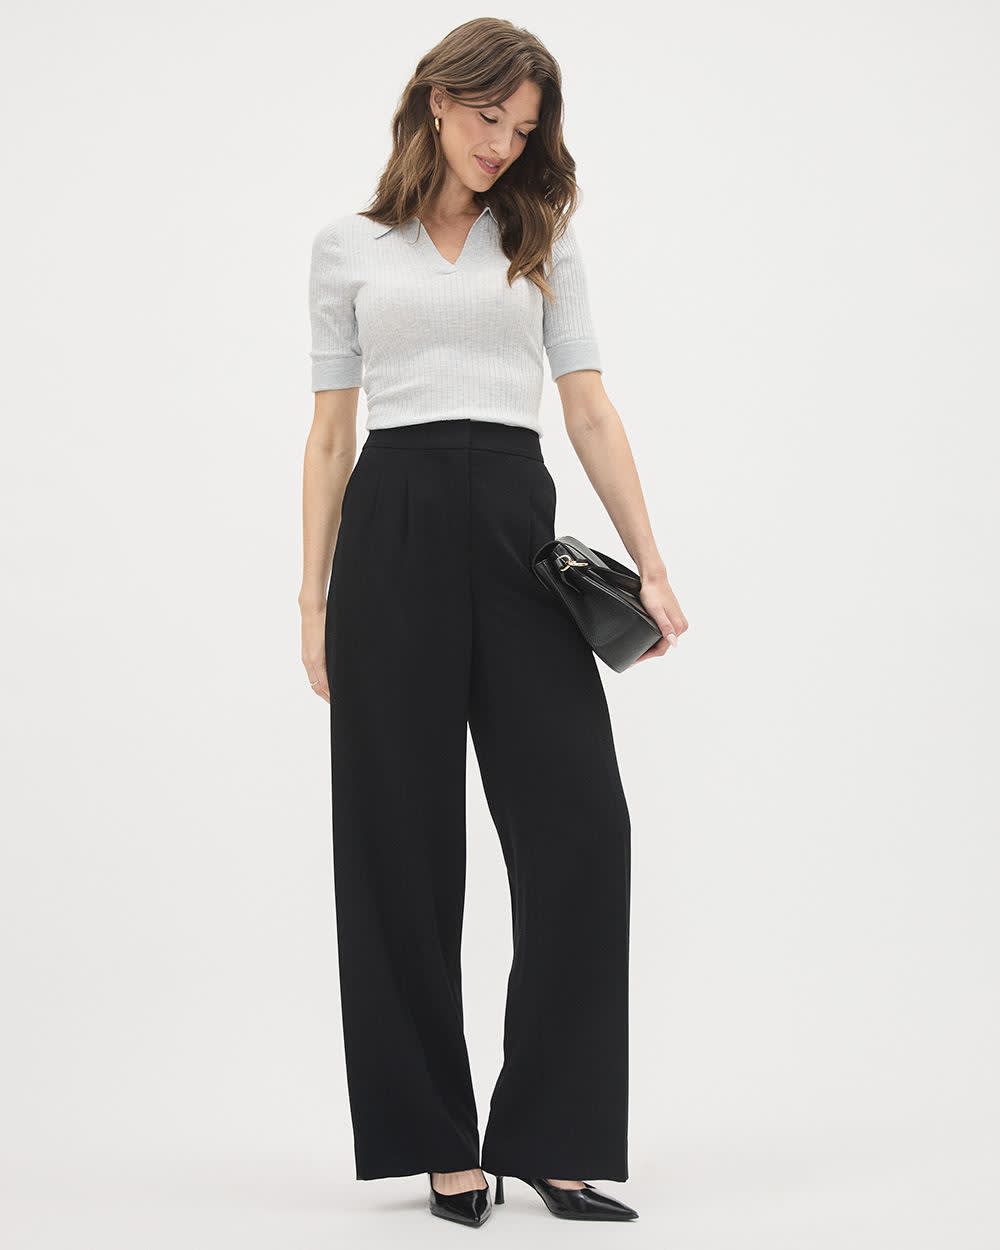 Black Silk Pants High-waisted Silk Pants 100% Silk Pant Long